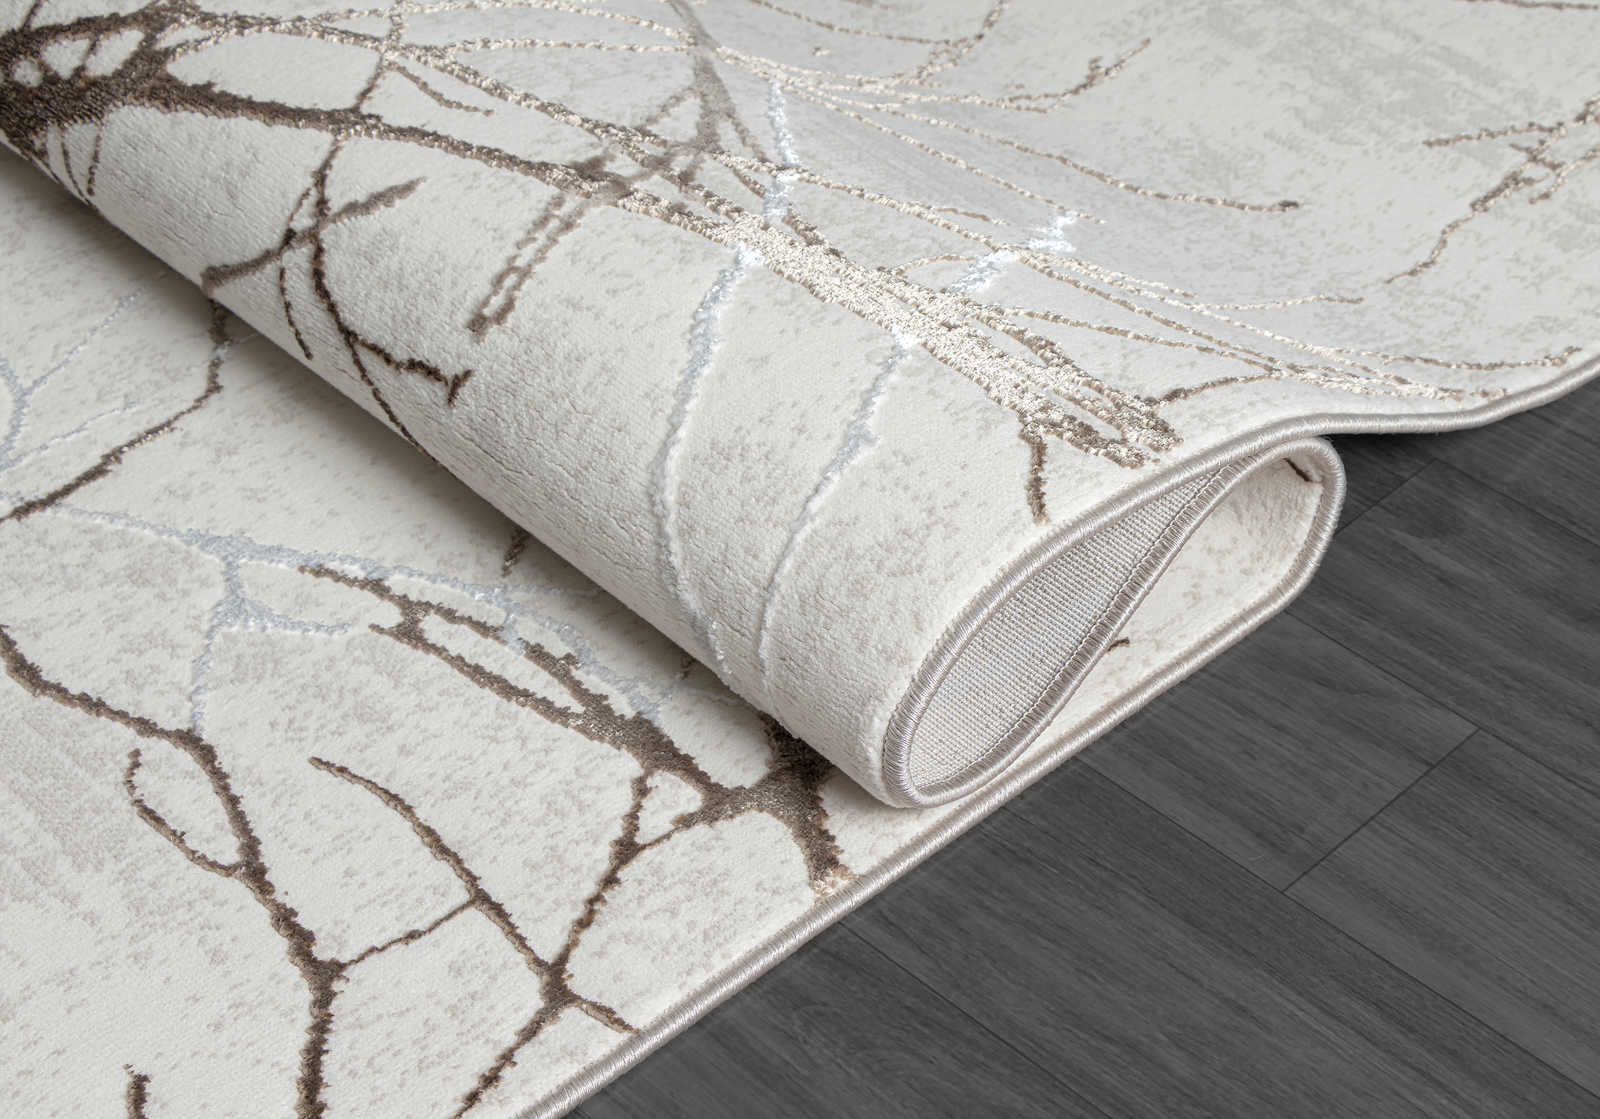             Pluizig hoogpolig tapijt in crème - 150 x 80 cm
        